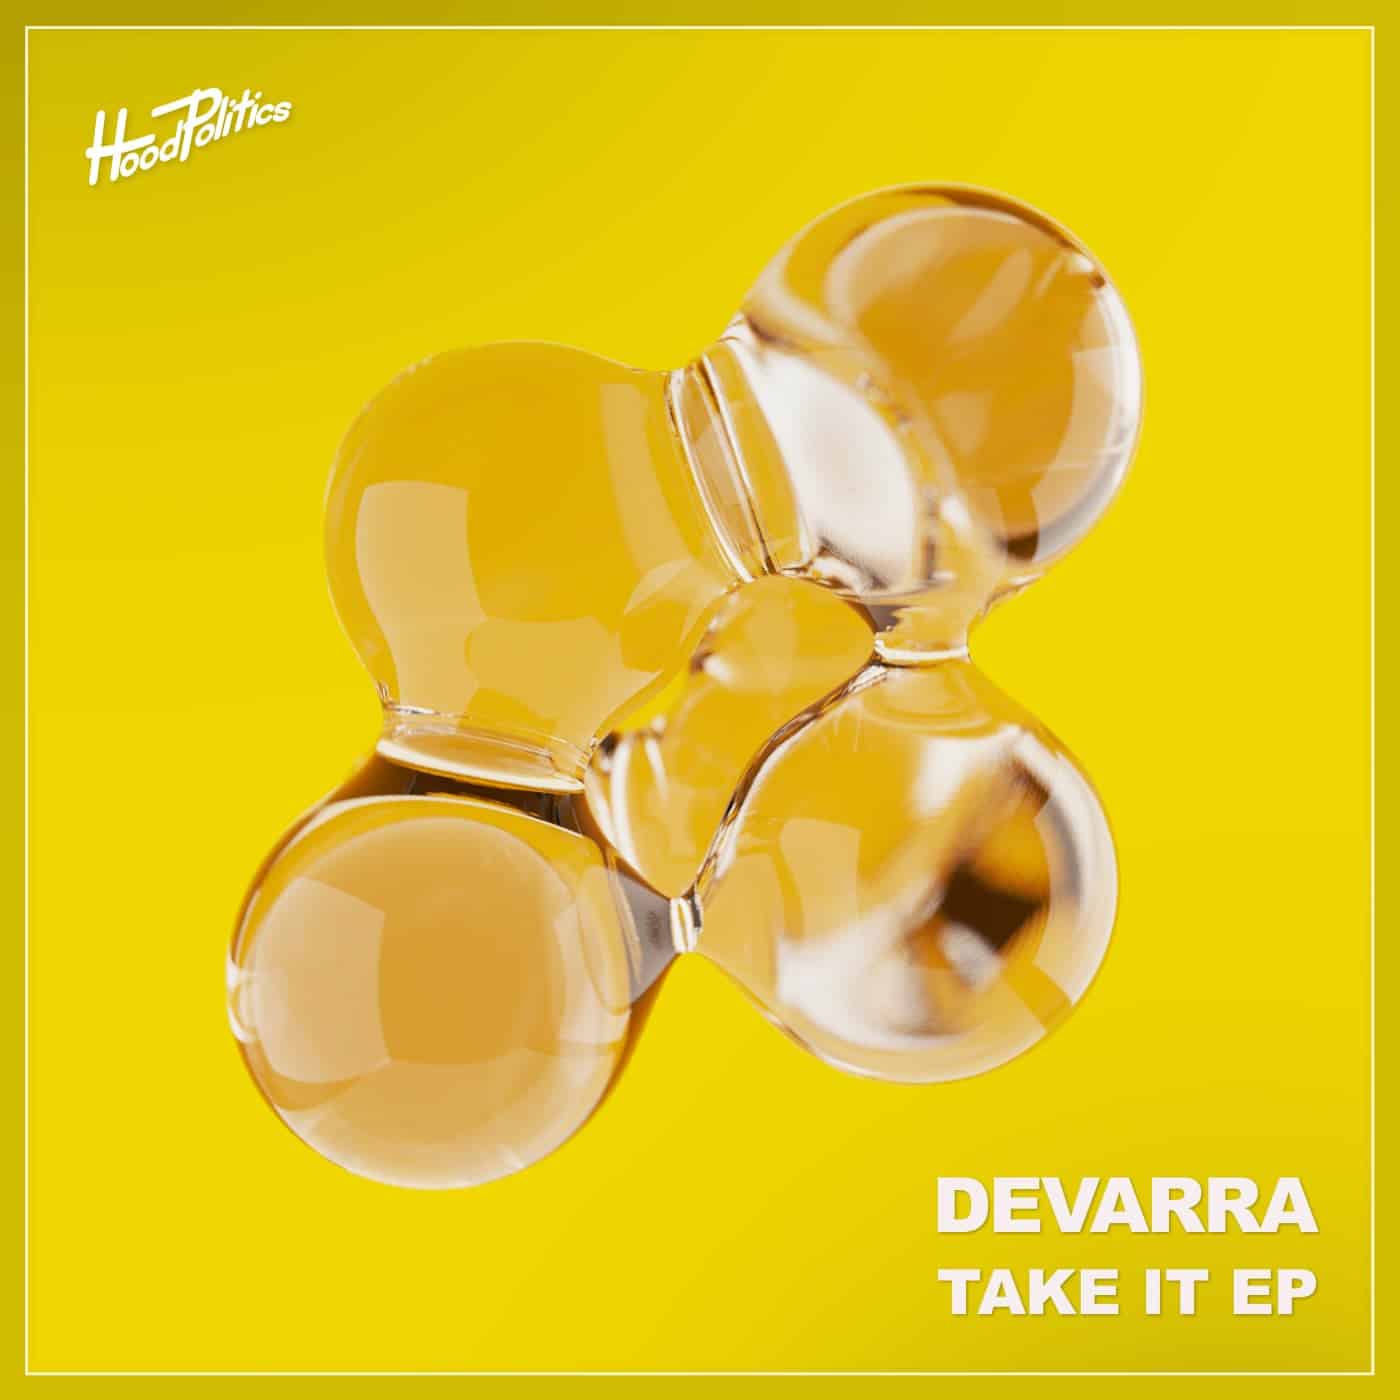 Download Devarra - Take It on Electrobuzz